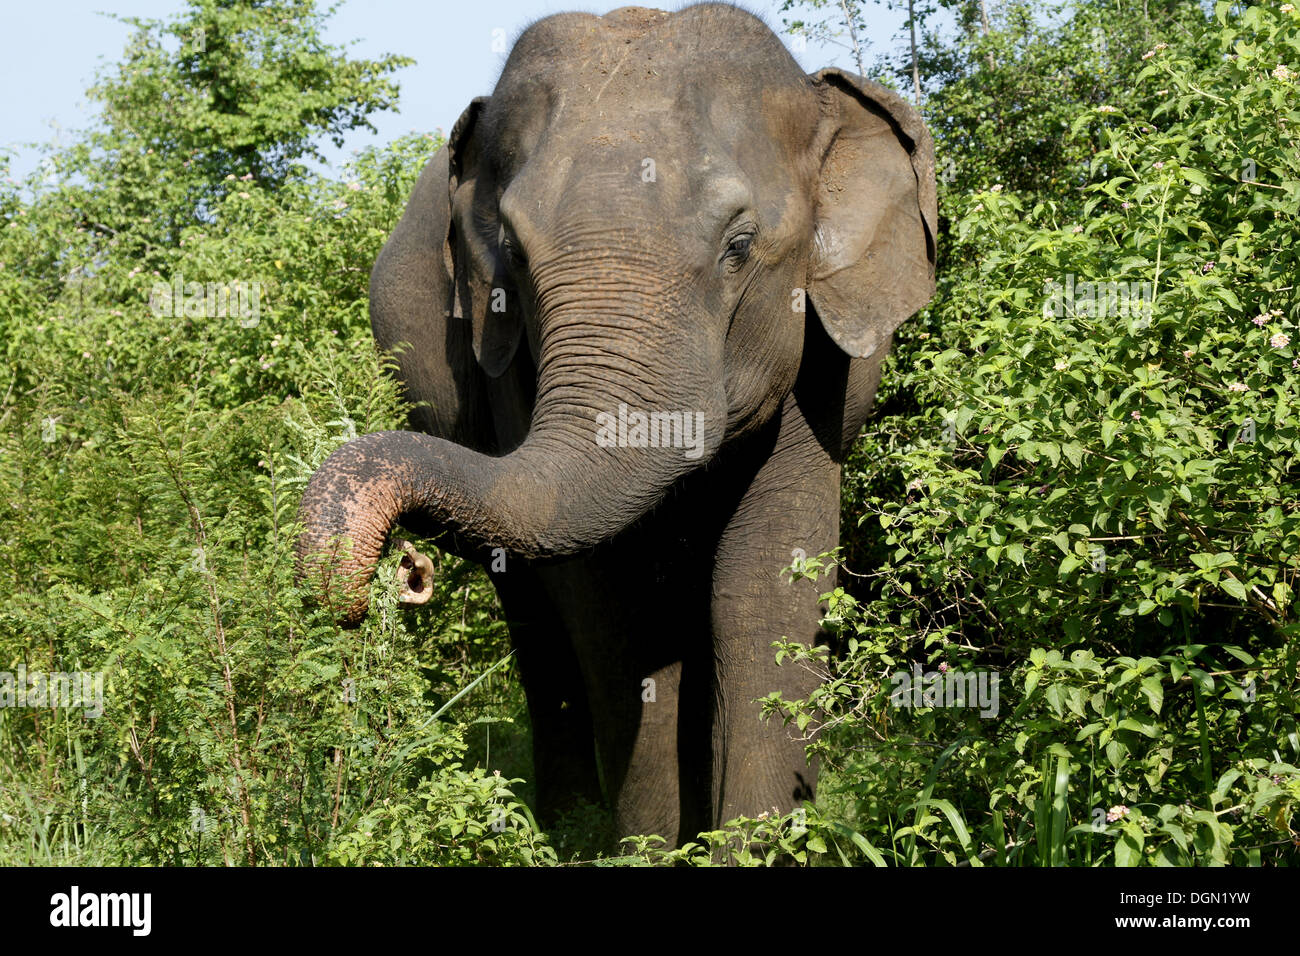 ASIAN ELEPHANT UDAWALAWE SAFARI PARK SRI LANKA 16 March 2013 Stock Photo